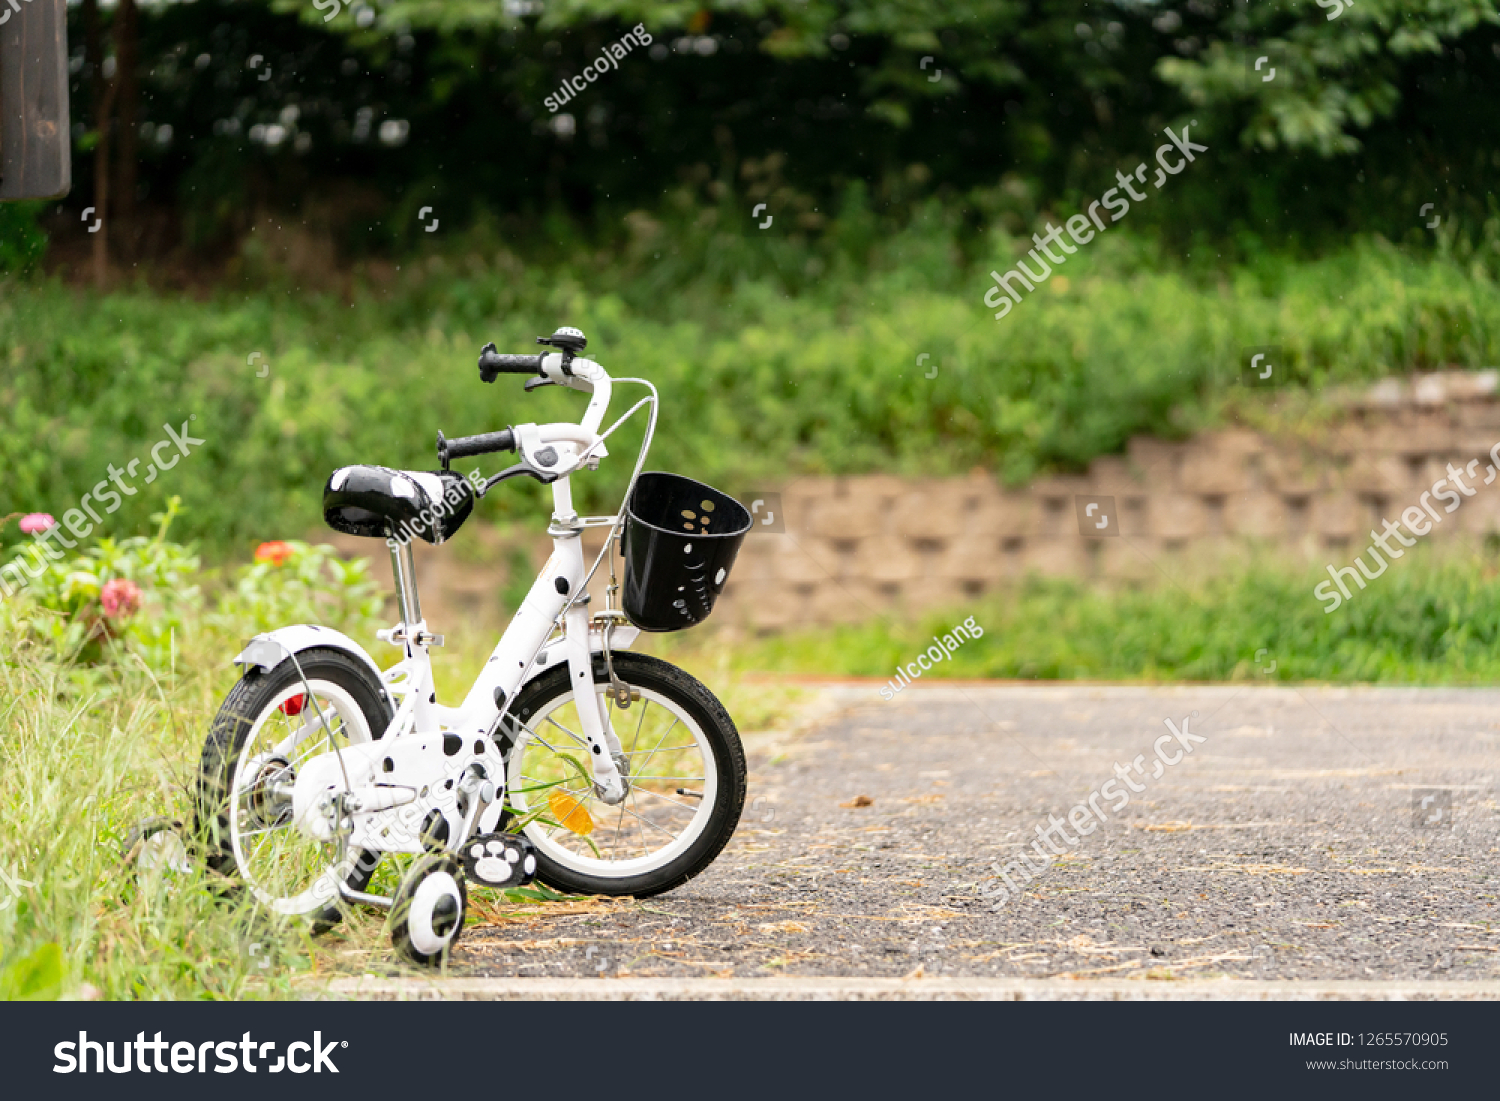 stand alone bike